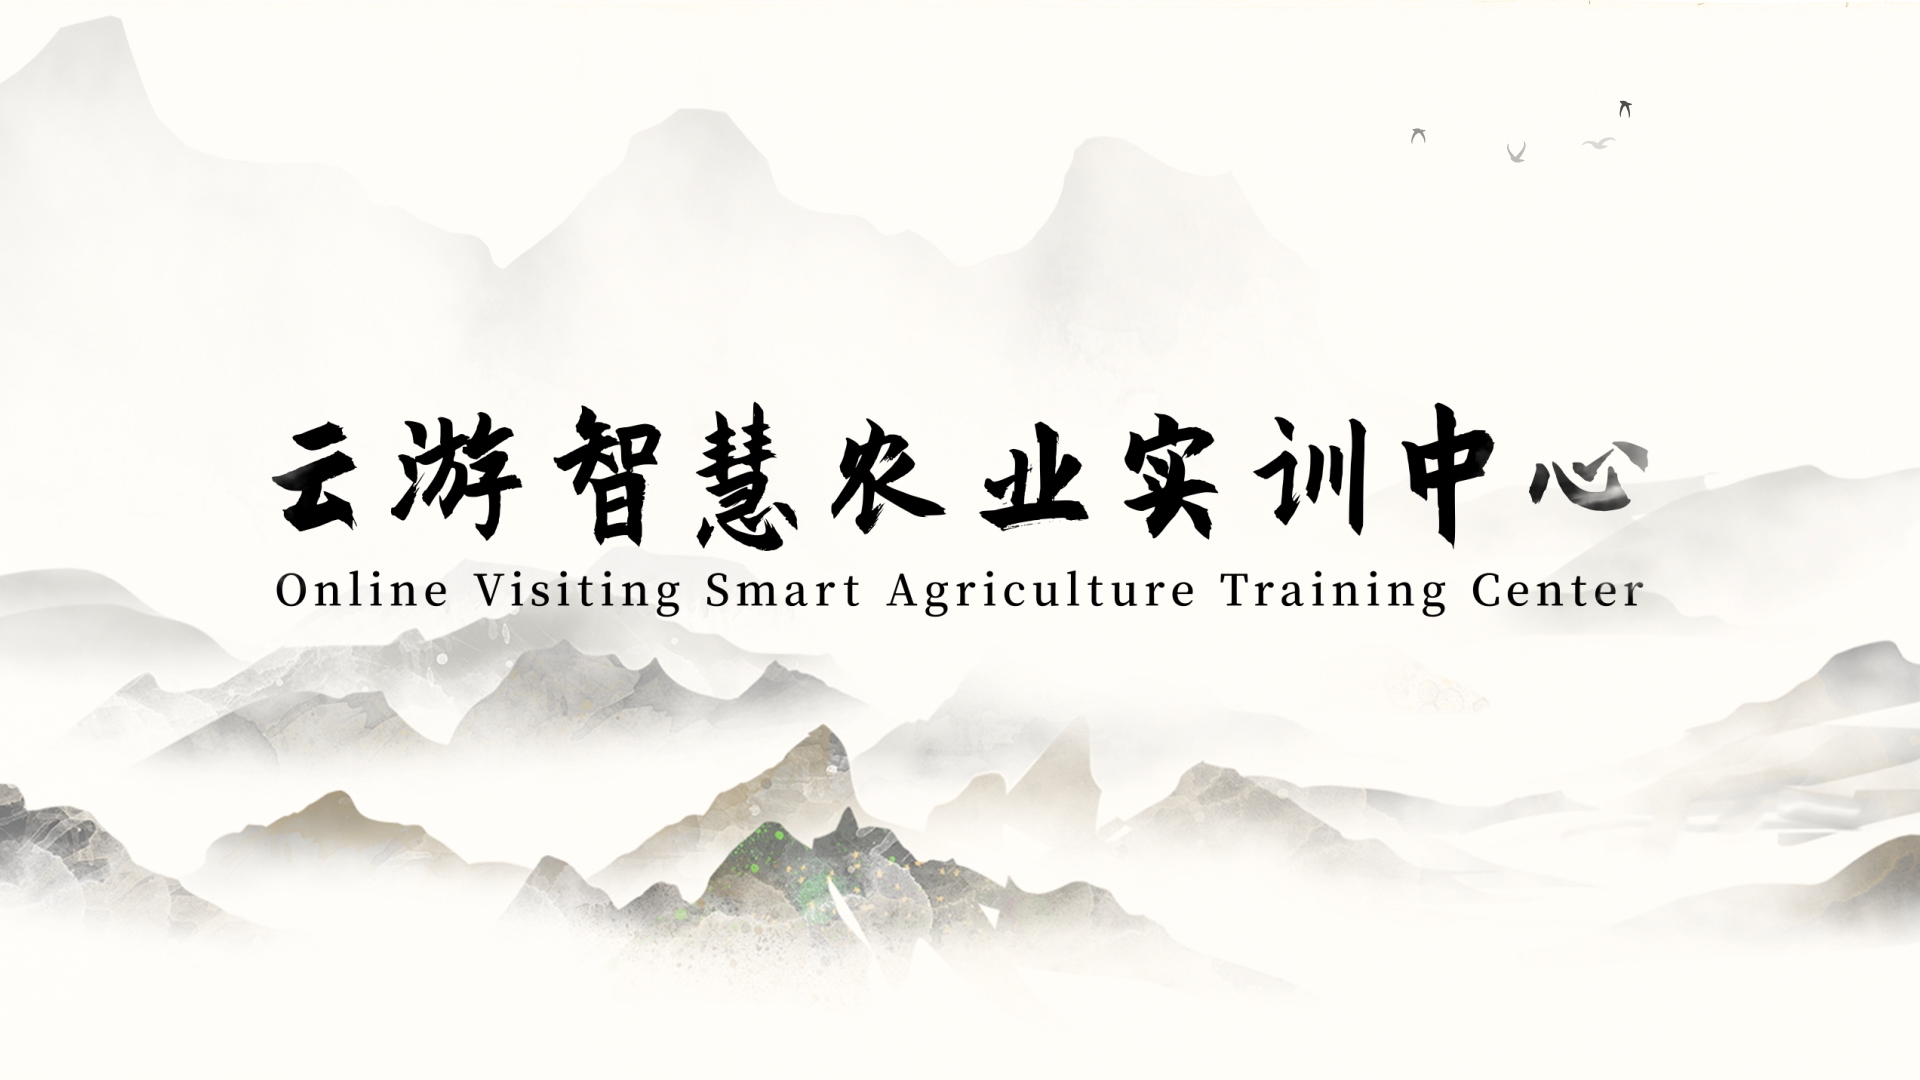 Online Visiting Smart Agriculture Training Center